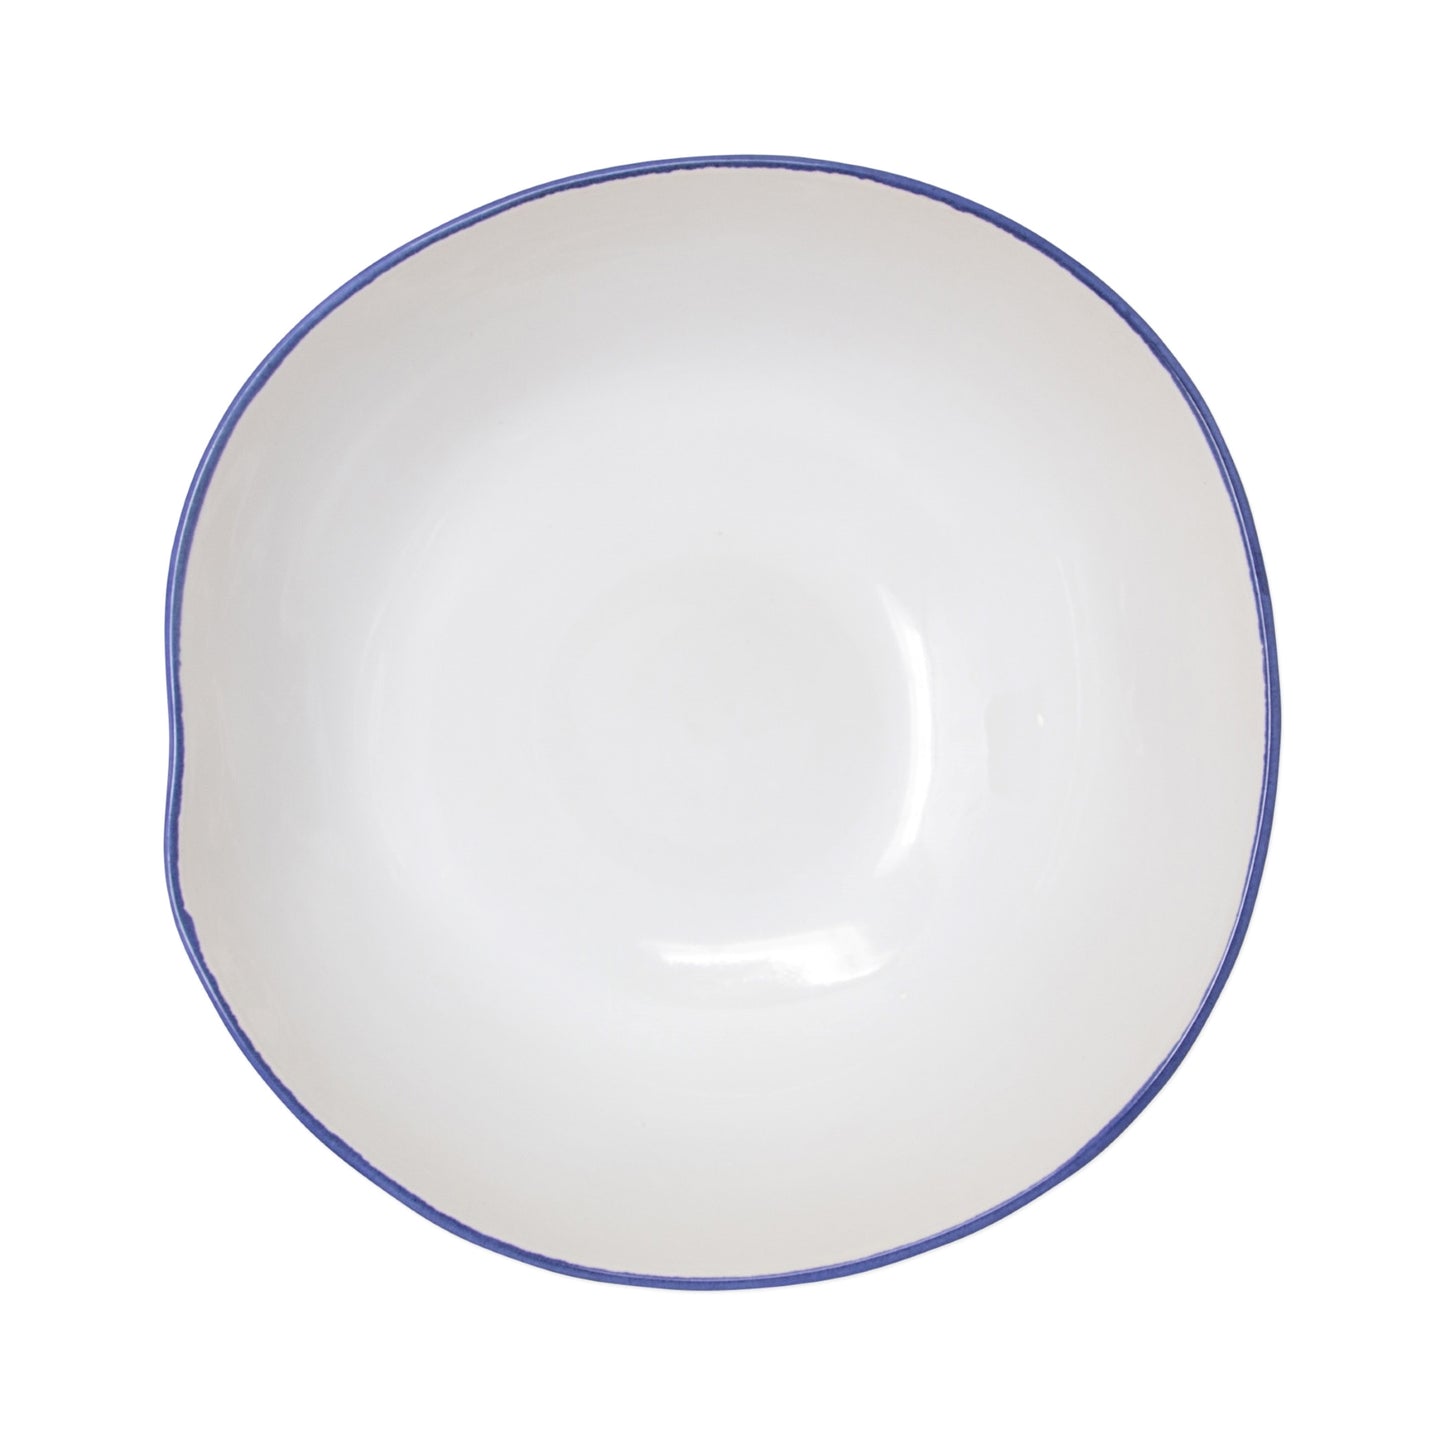 Vietri Aurora Edge Medium Bowl, Stoneware Serveware Dish for Entertaining